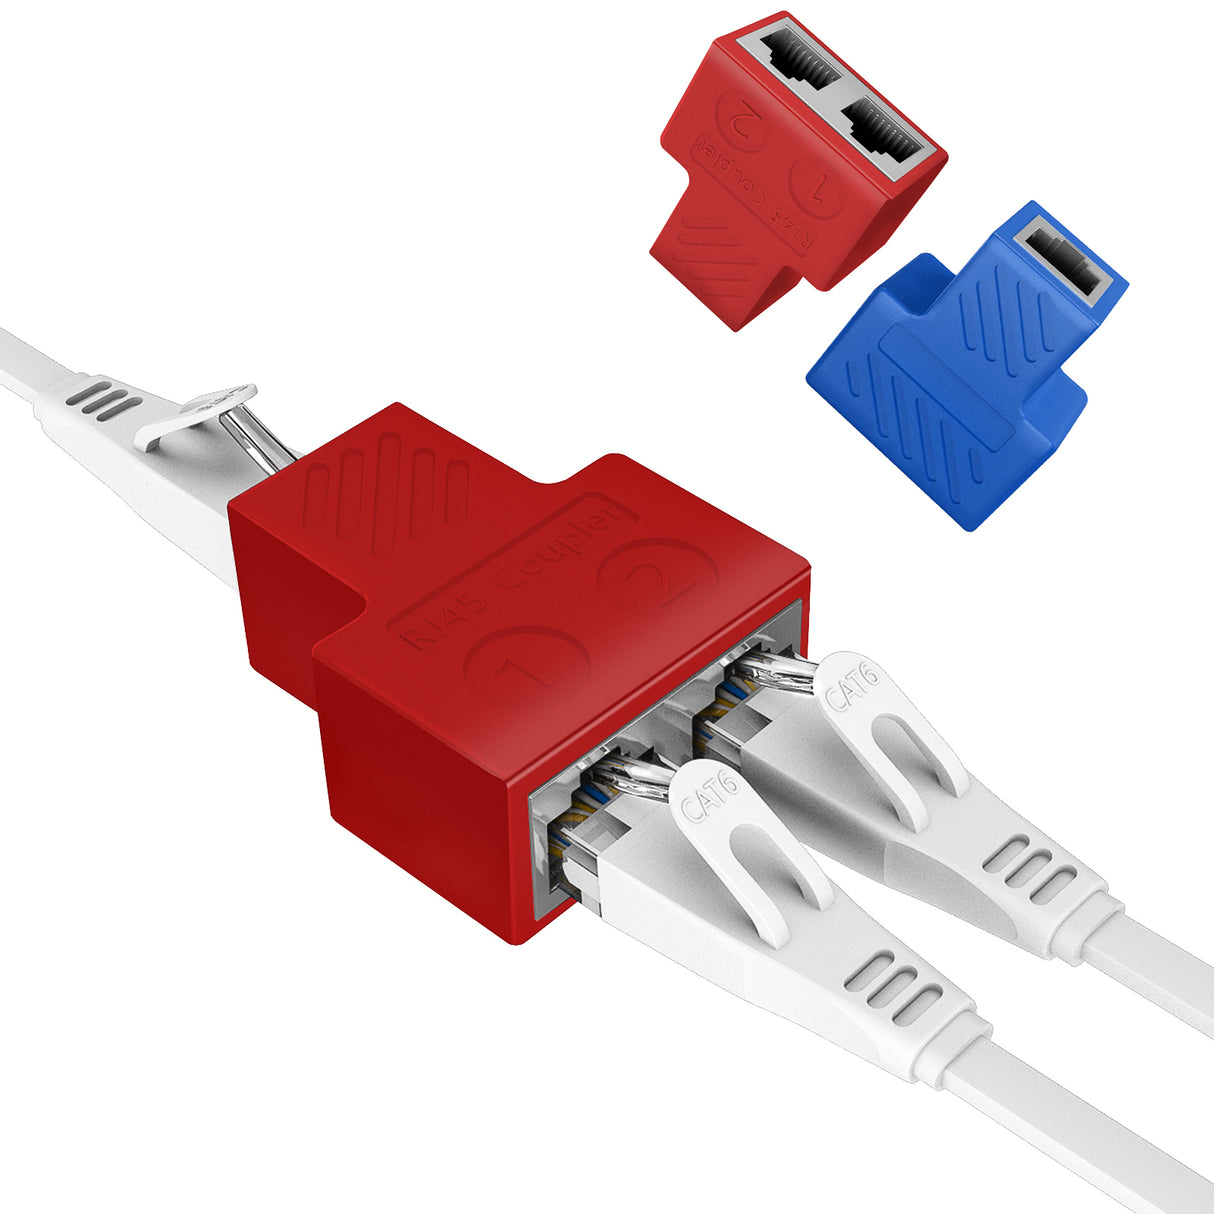 2 Pack Ethernet Splitter 1 to 2 Extender, BARDESTU RJ45 Splitter 2 Ports High Speed Internet LAN Cable Extension Connector 8P8C for Cat7/Cat6/Cat5/Cat5e, Red (Red) - vandesail